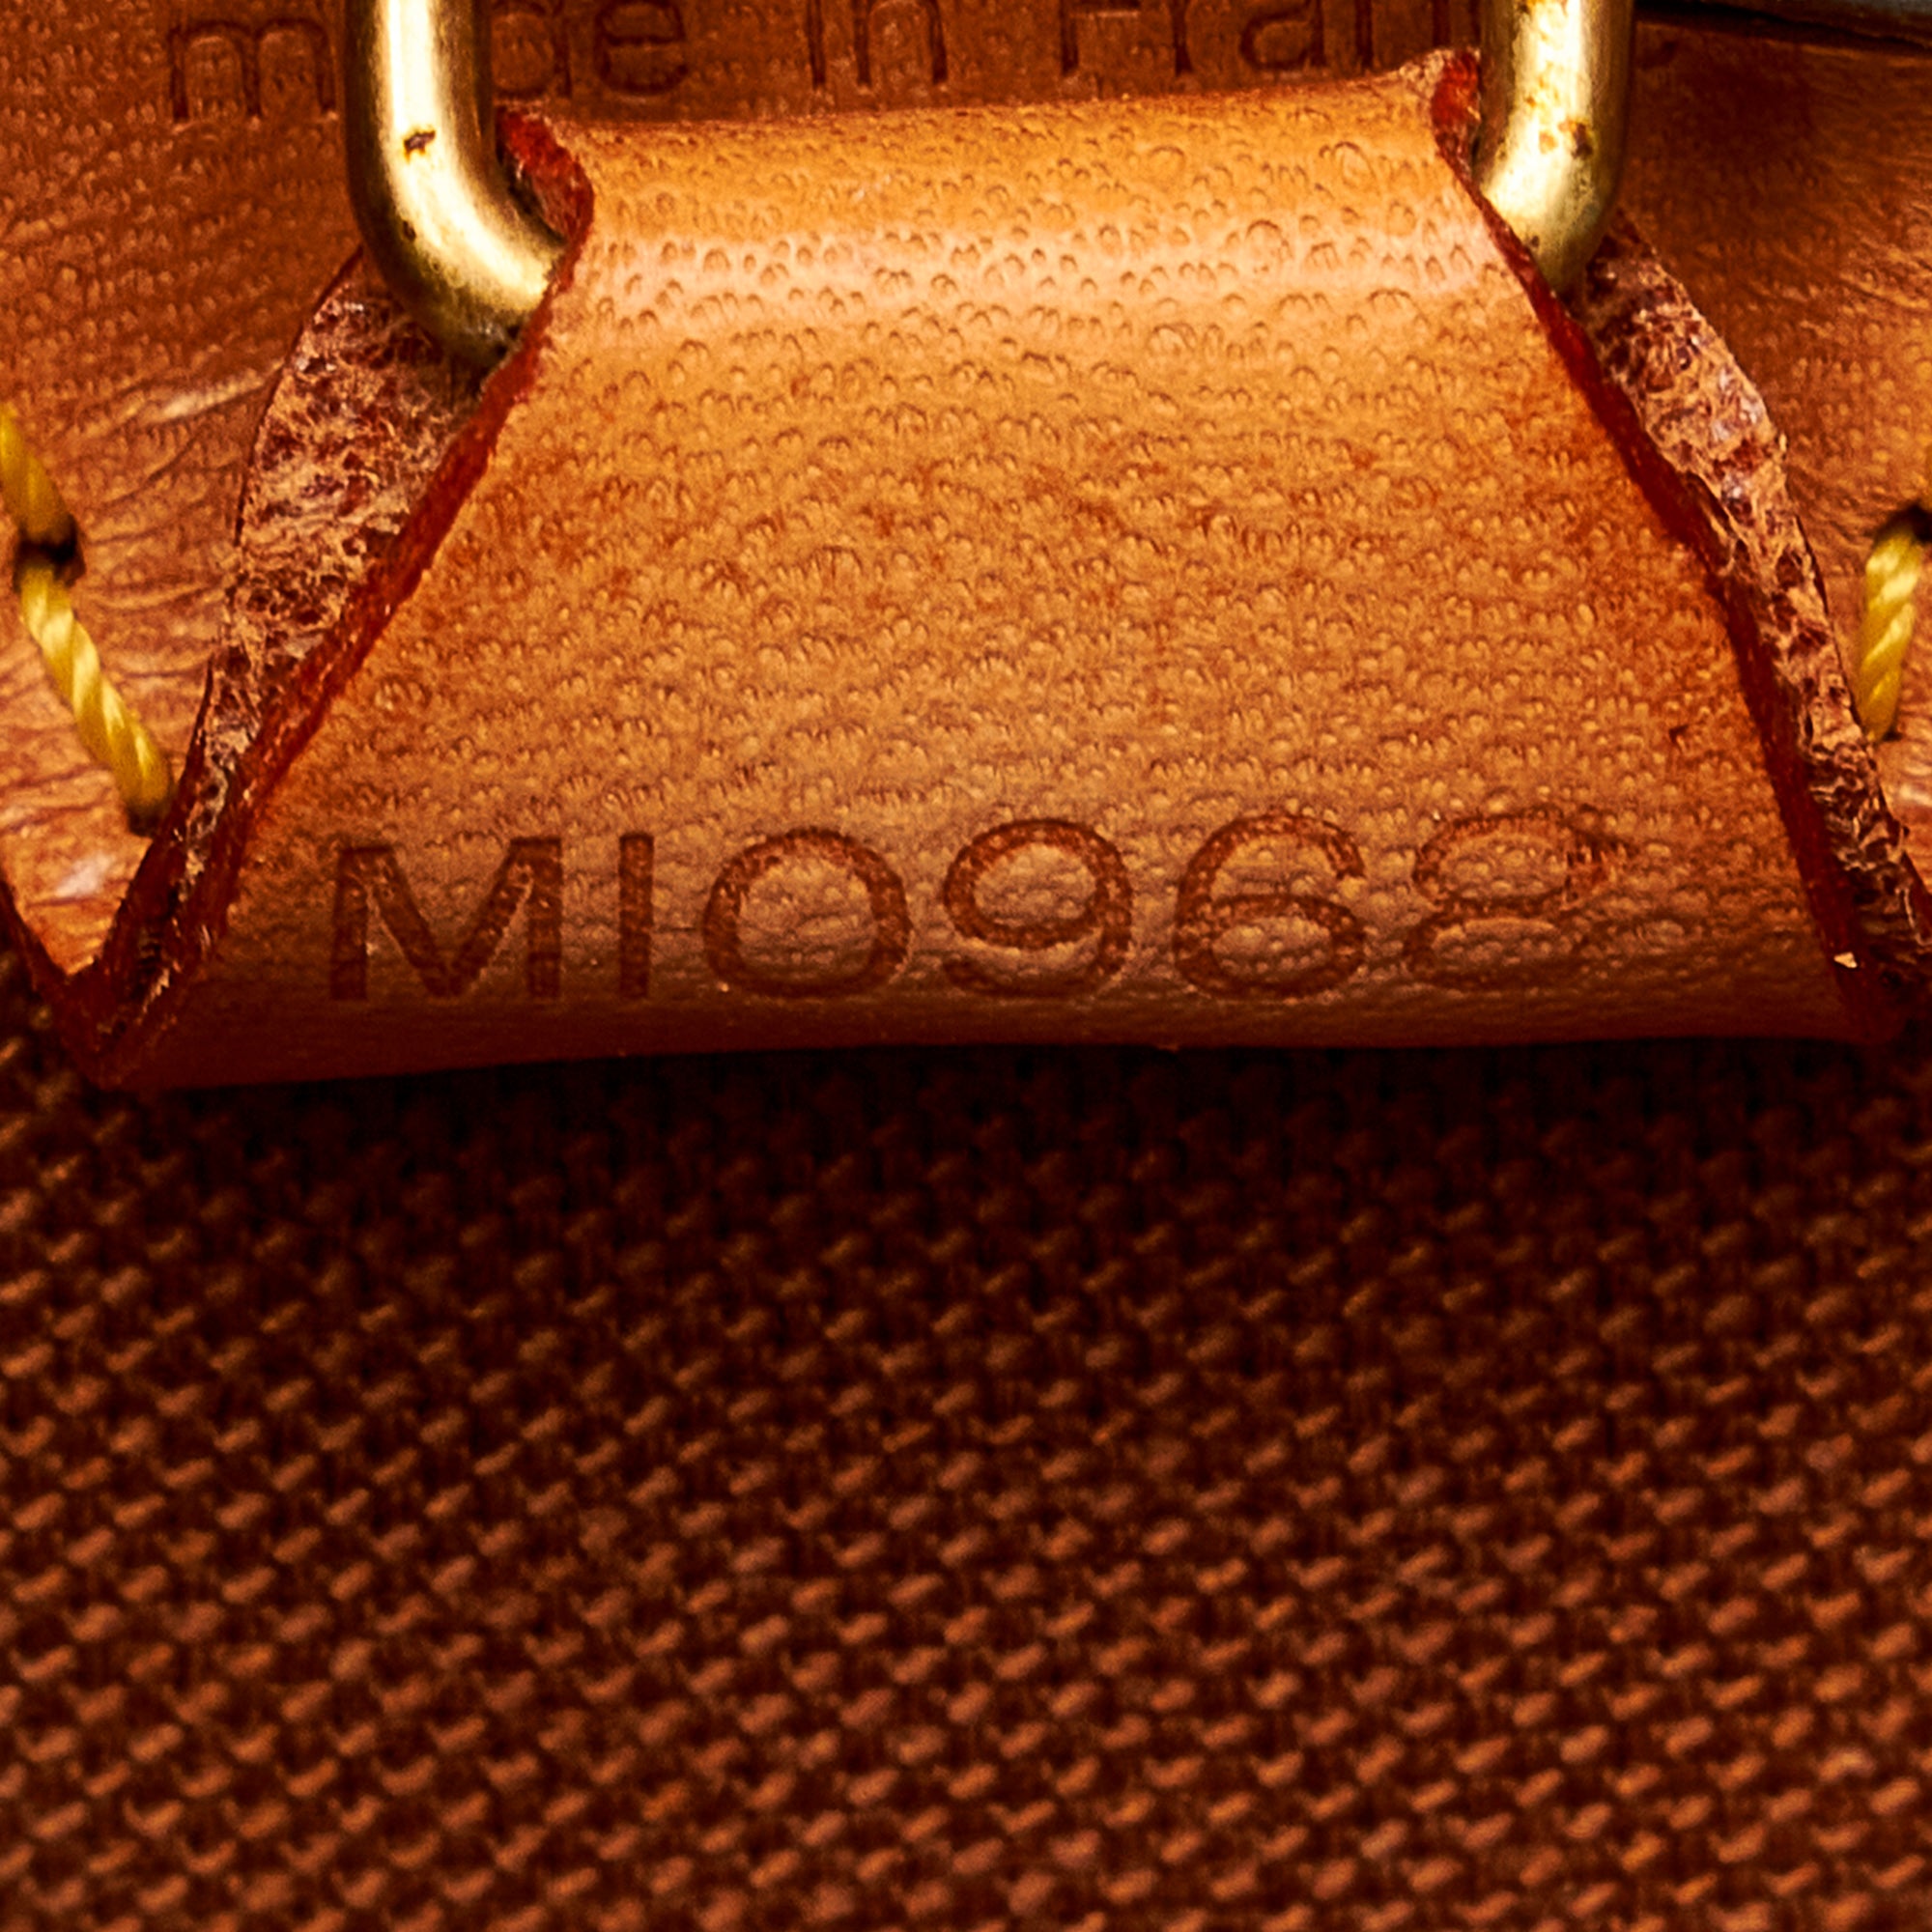 RvceShops Revival, Brown Louis Vuitton Monogram Ellipse PM Handbag